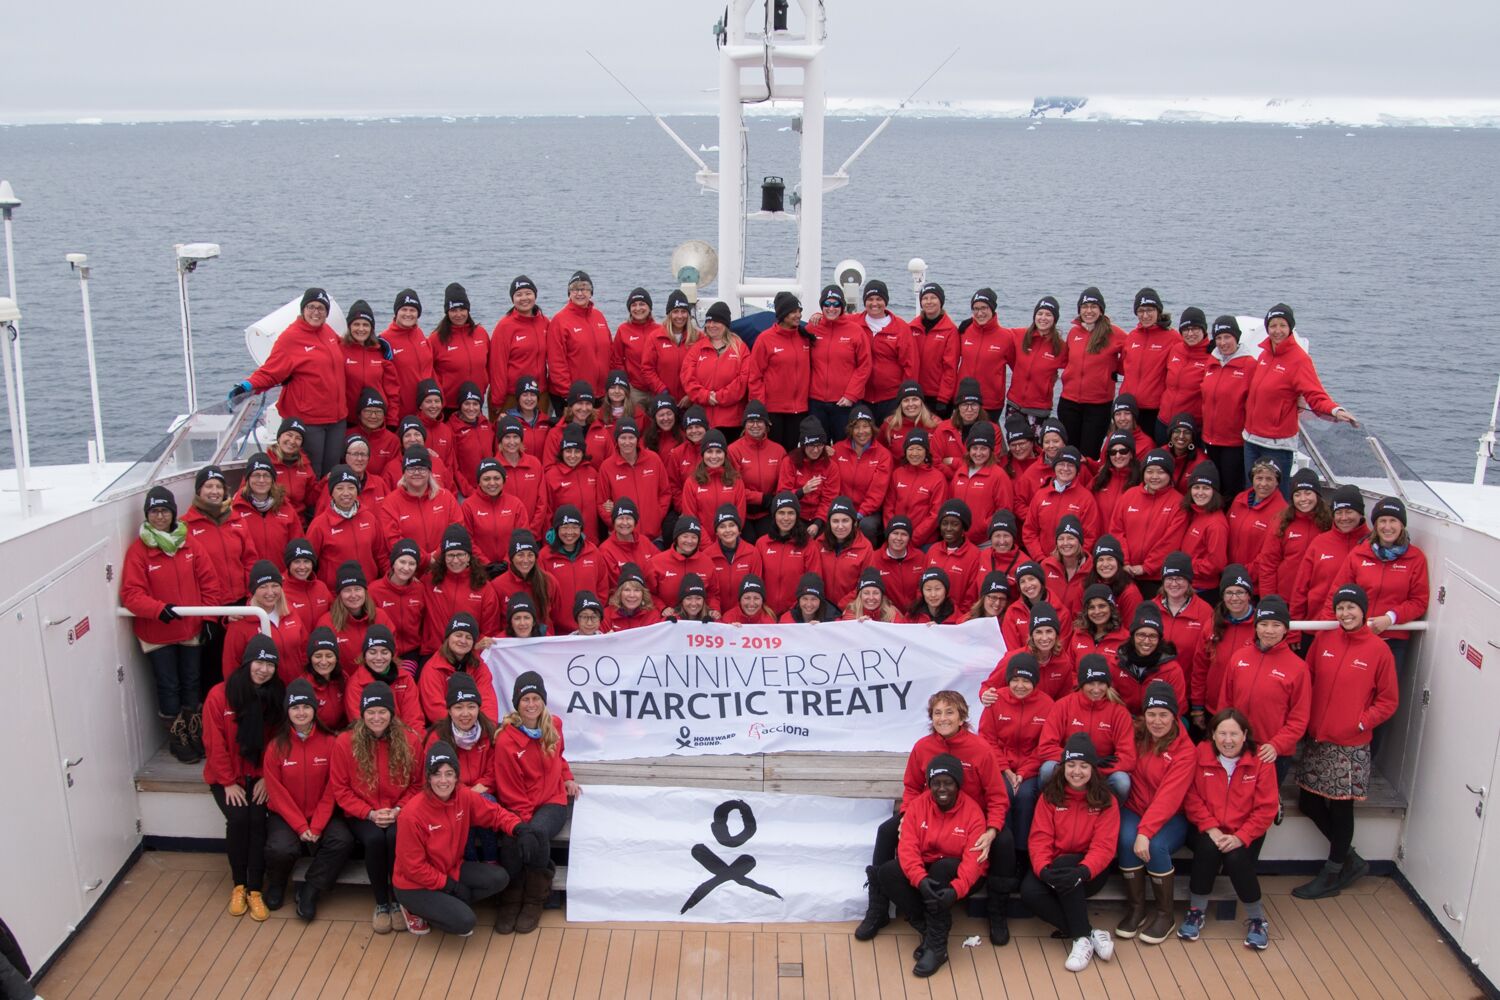 Homeward Bound 4 cohort with Antarctic treaty flag